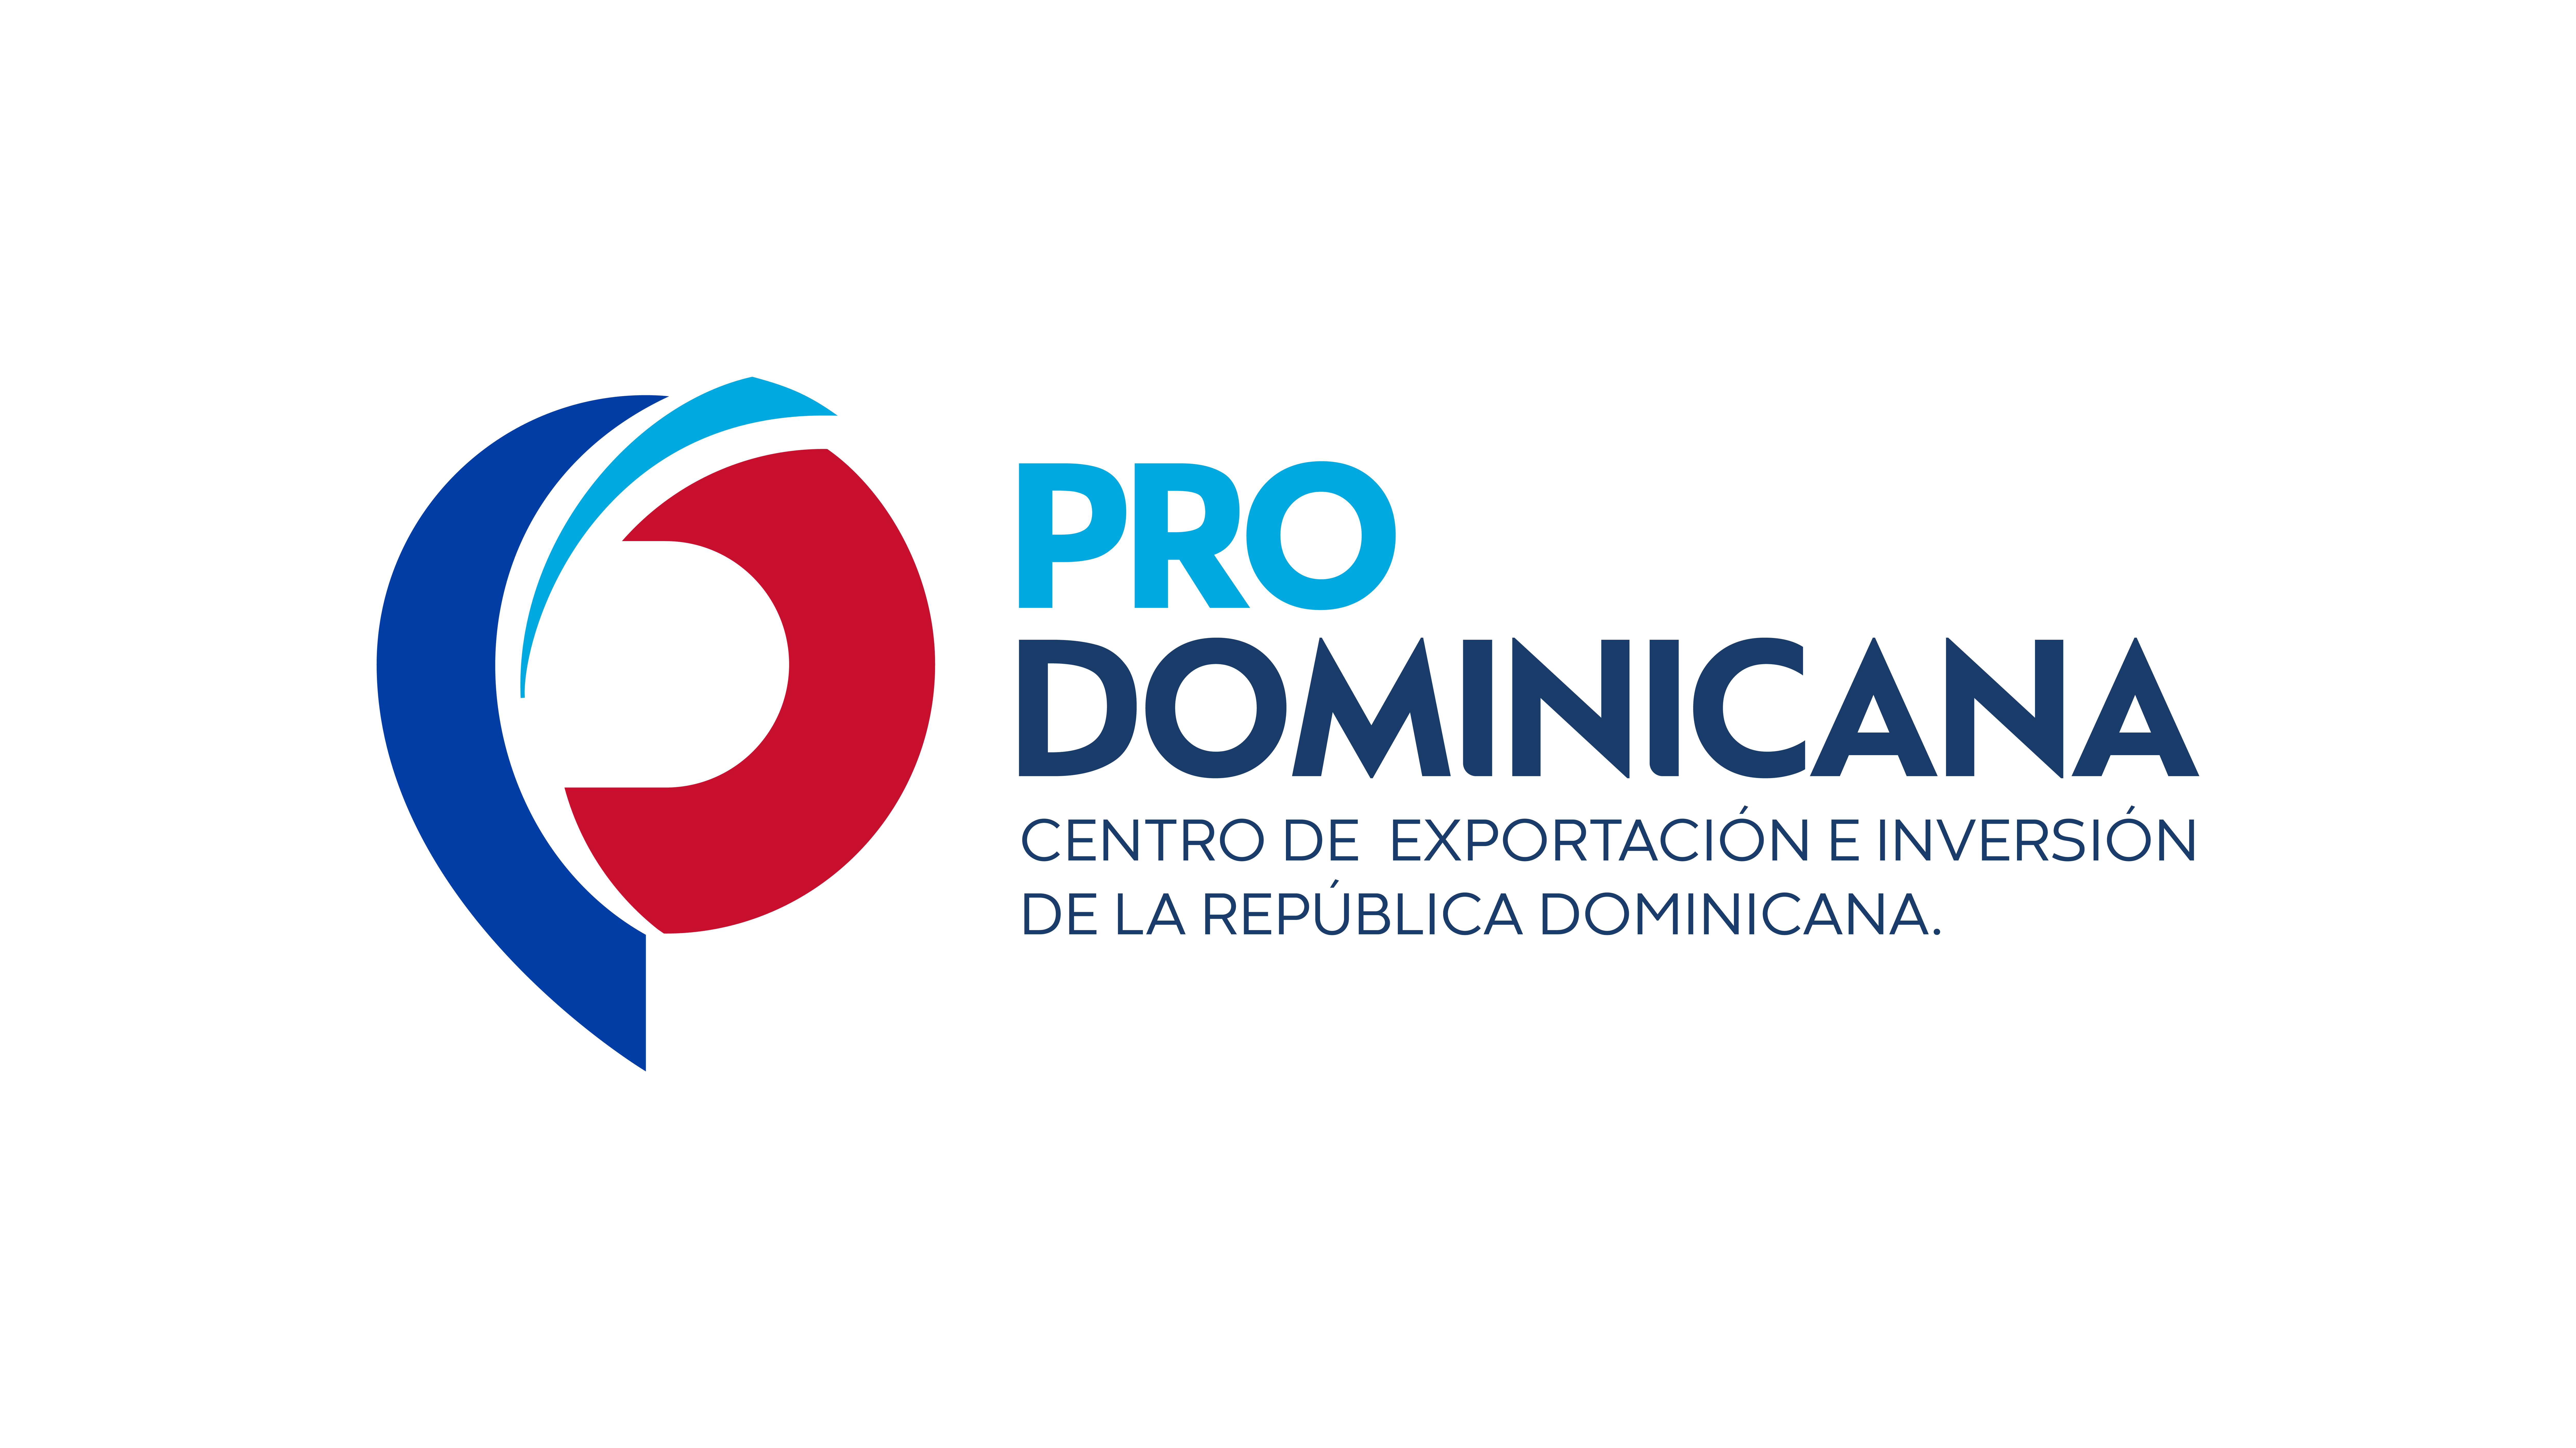 ProDominicana logo